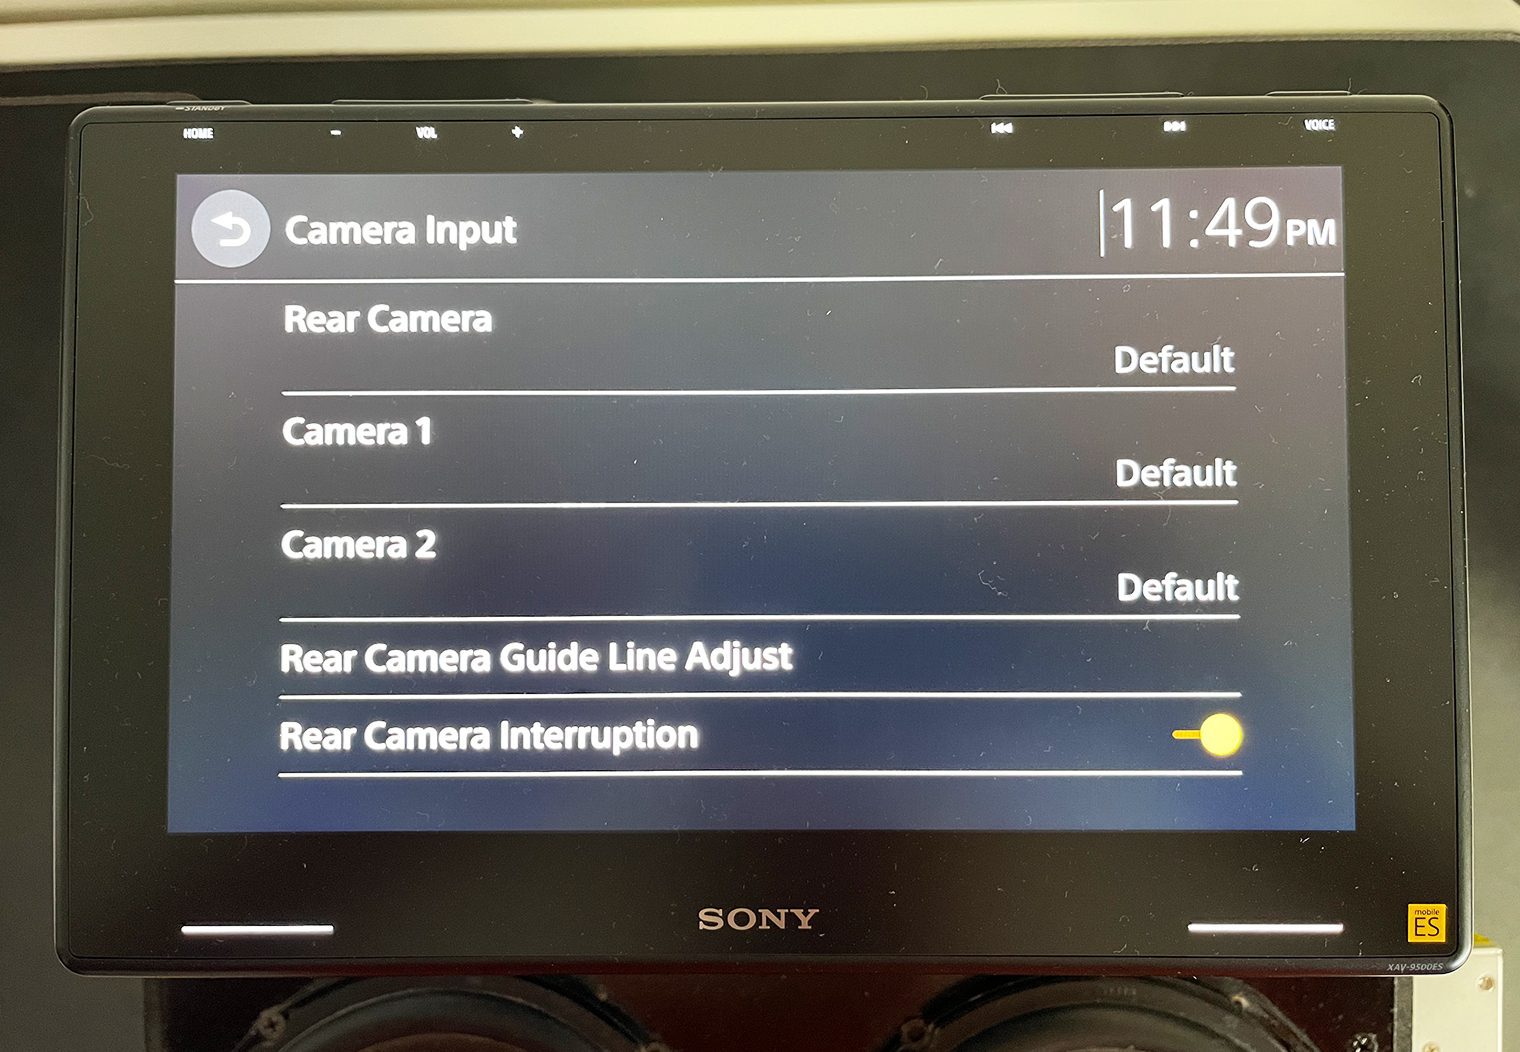 Sony XAV-9500ES camera input settings